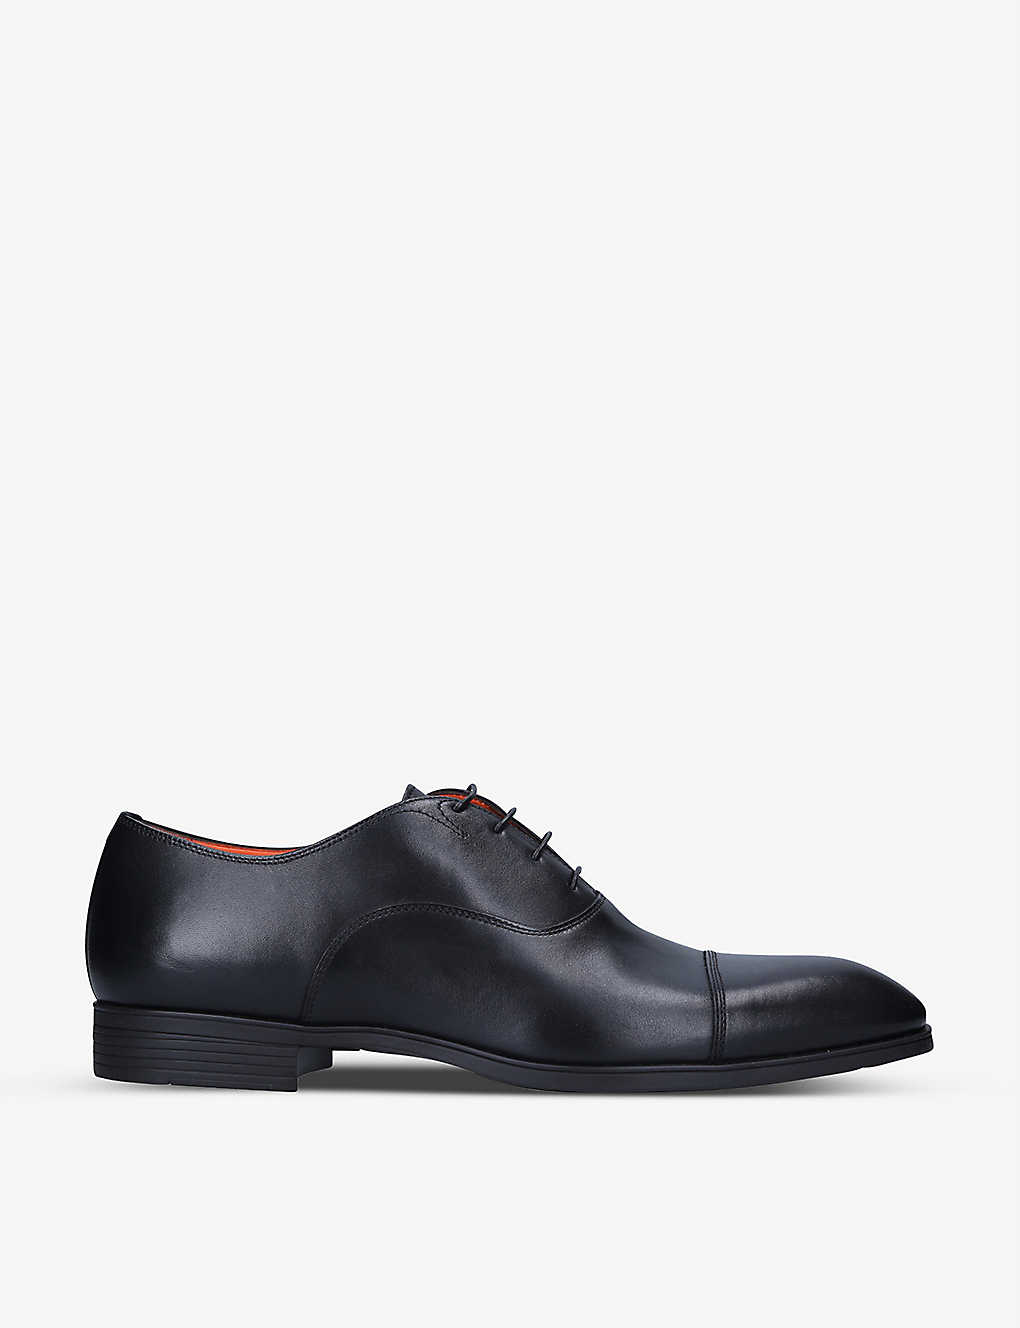 Shop Santoni Men's Black Simon Leather Oxford Shoes